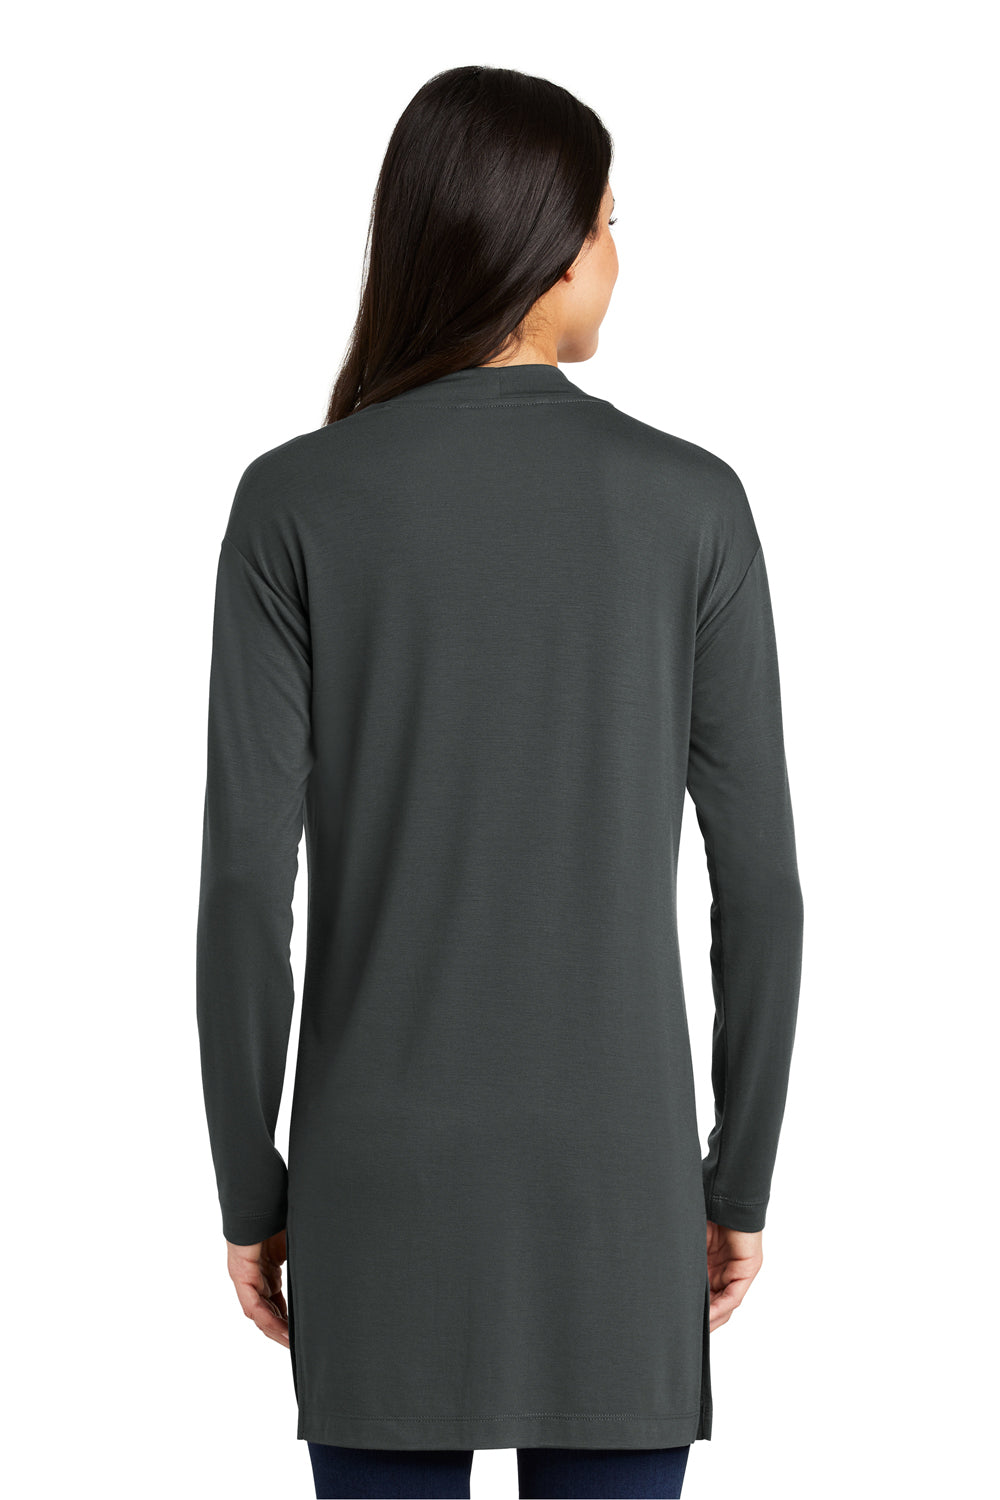 Port Authority LK5434 Womens Concept Long Sleeve Cardigan Sweater w/ Pockets Smoke Grey Back